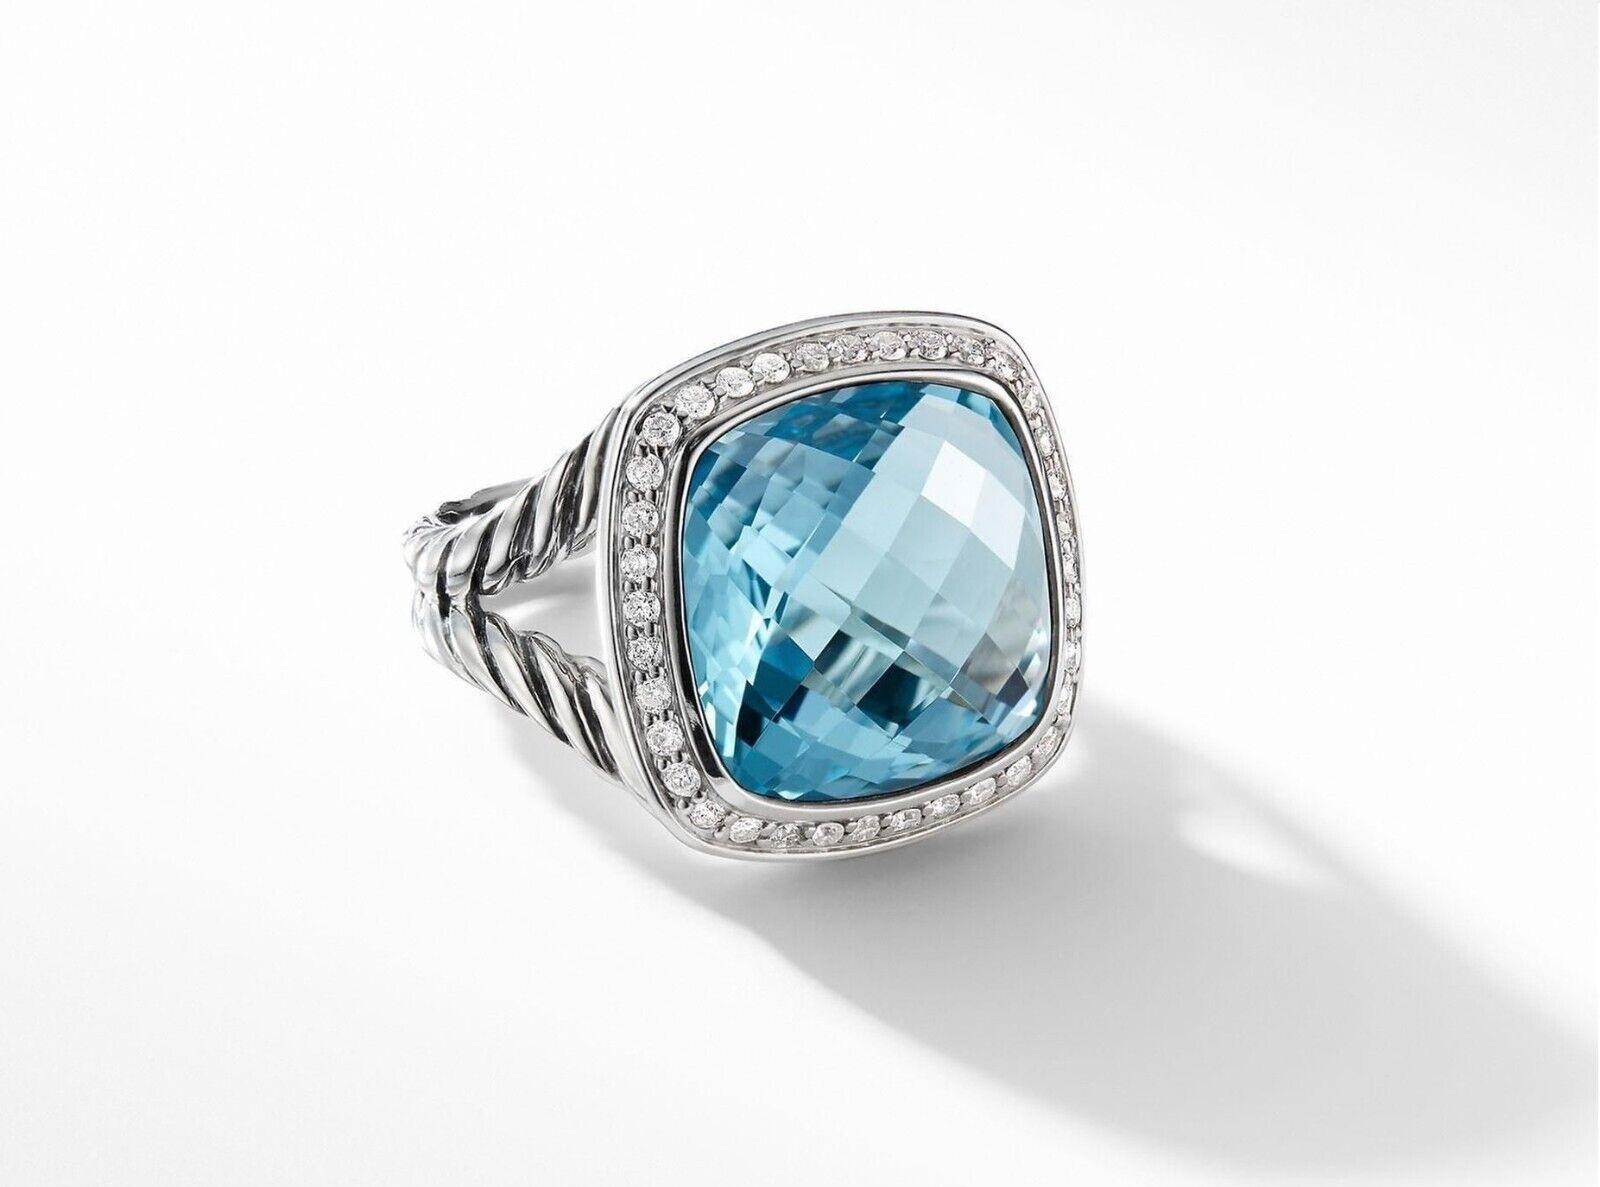   Brand David Yurman
  Gender Women
  Material Sterling Silver
  Ring Blue Topaz with diamonds
  Ring Size 7
  Topaz 14x14mm
  Weight 17gr
  Comes with David Yurman pouch
  

                                     
                                    